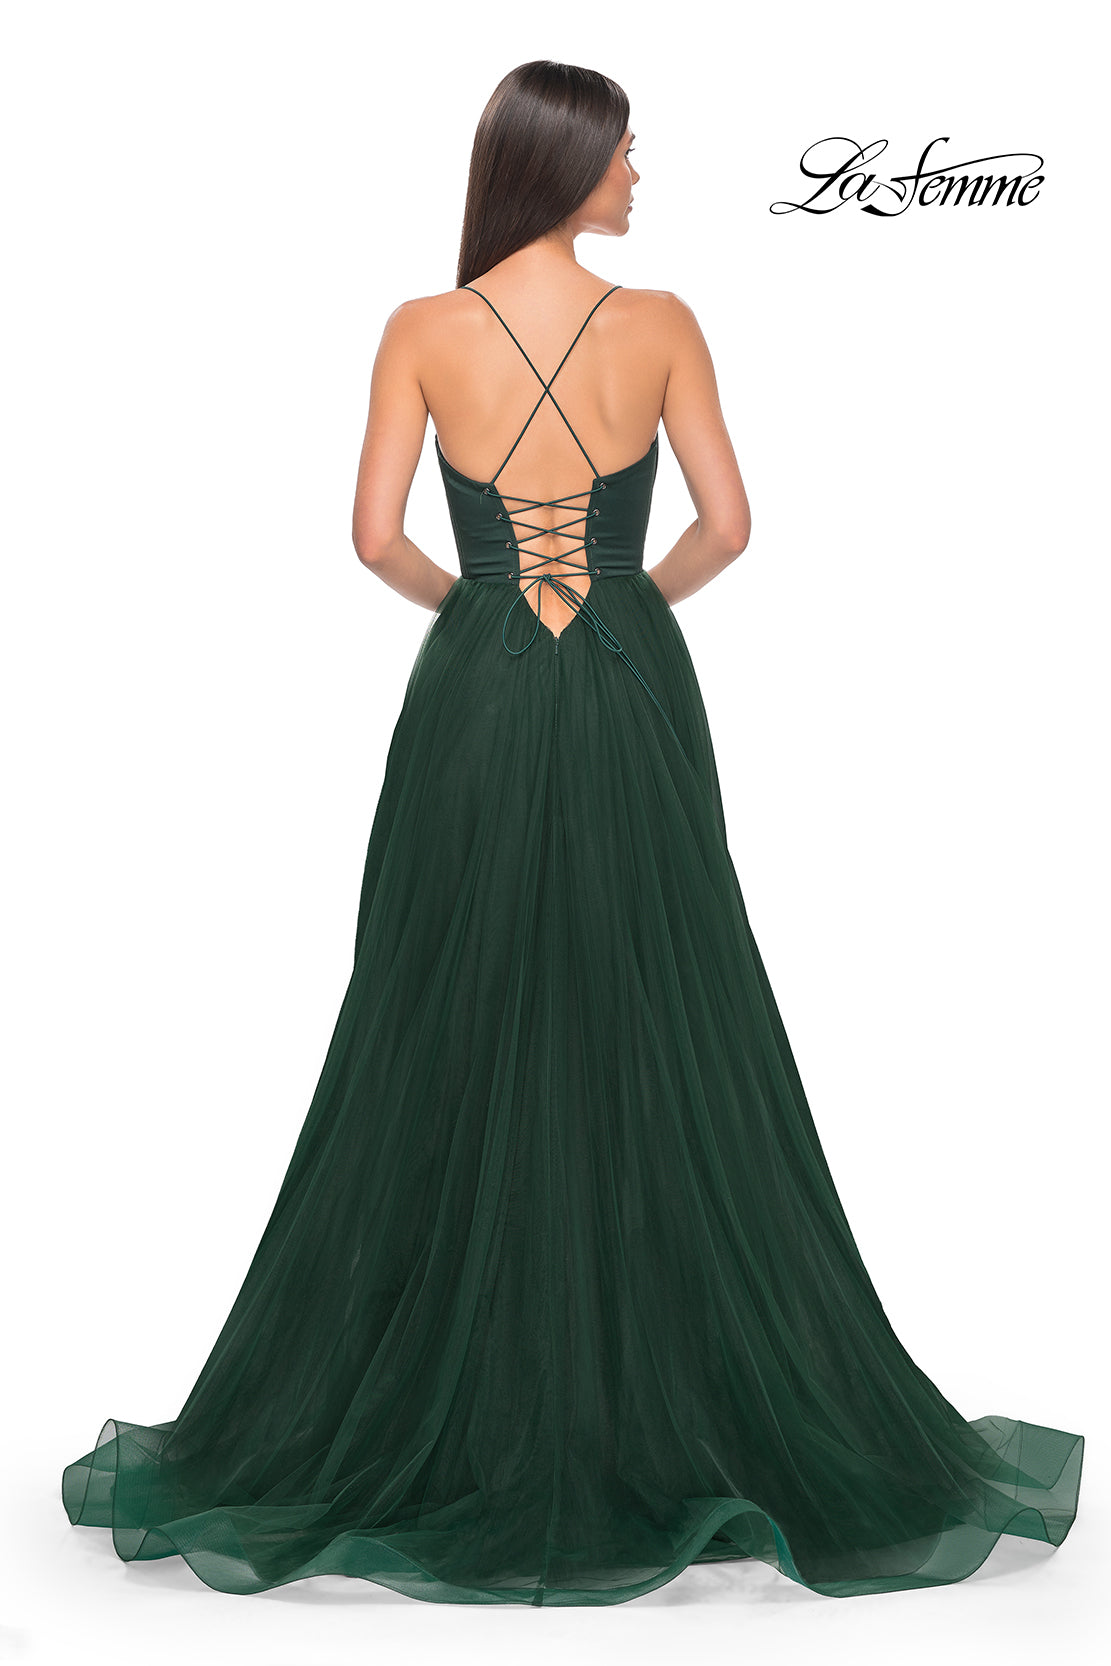 La-Femme-32065-Sweetheart-Neckline-Lace-up-Back-High-Slit-Jersey-Tulle-A-Line-Dark-Emerald-Evening-Dress-B-Chic-Fashions-Prom-Dress